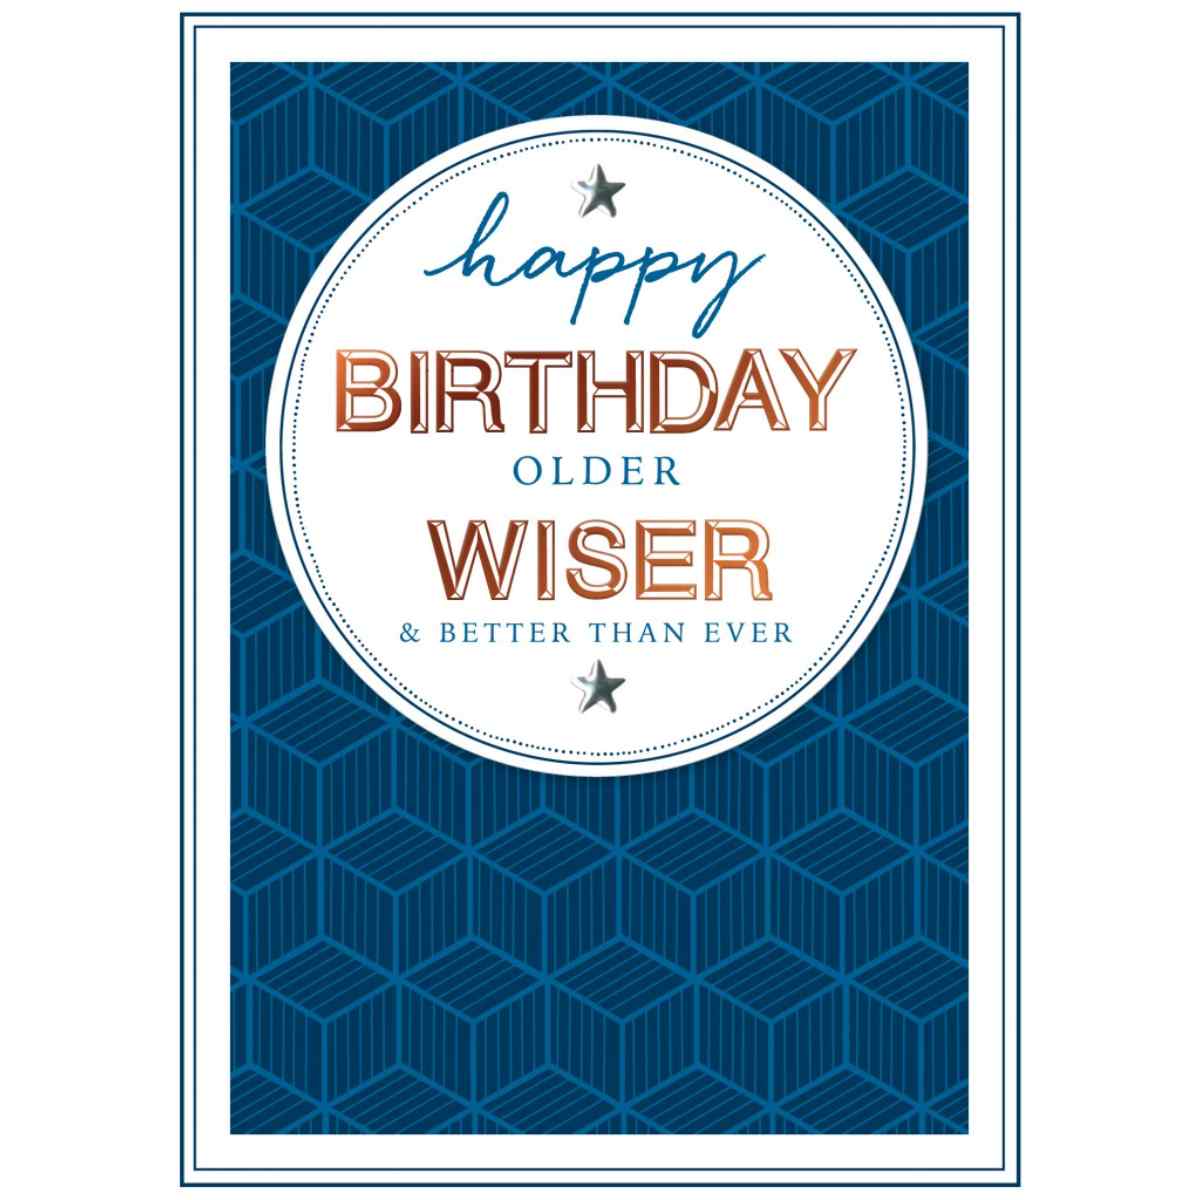 Happy Birthday Older Wiser Greeting Card